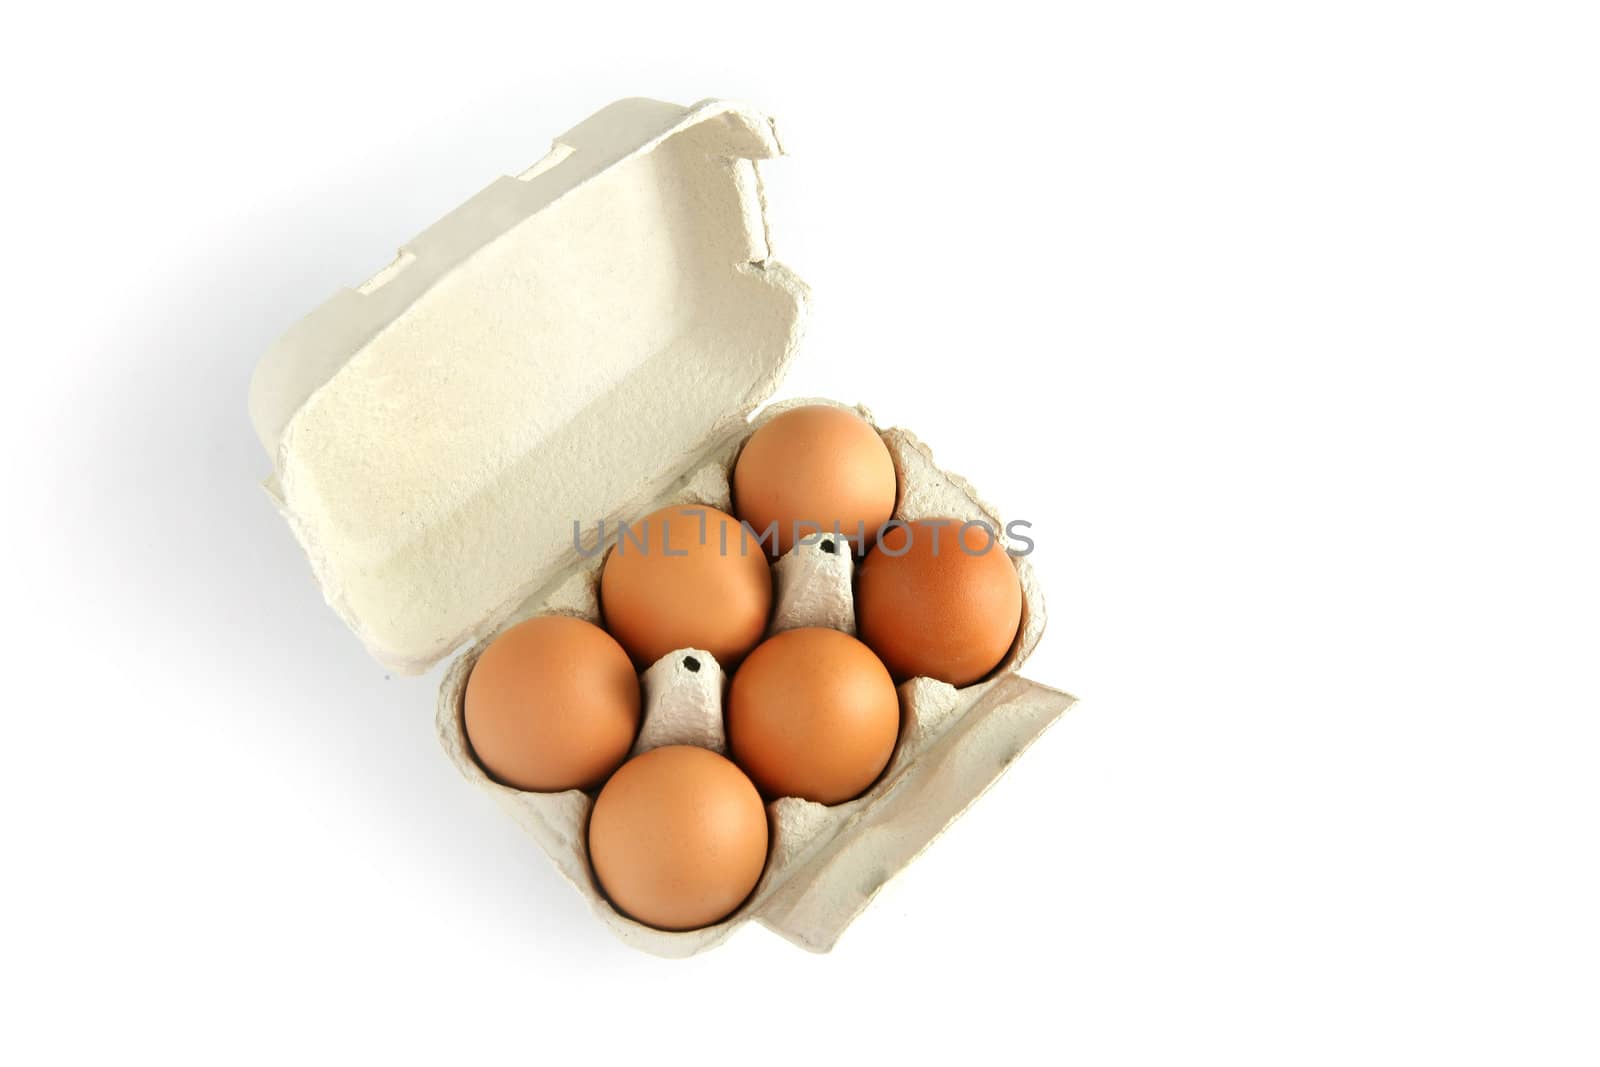 Carton of eggs by phovoir